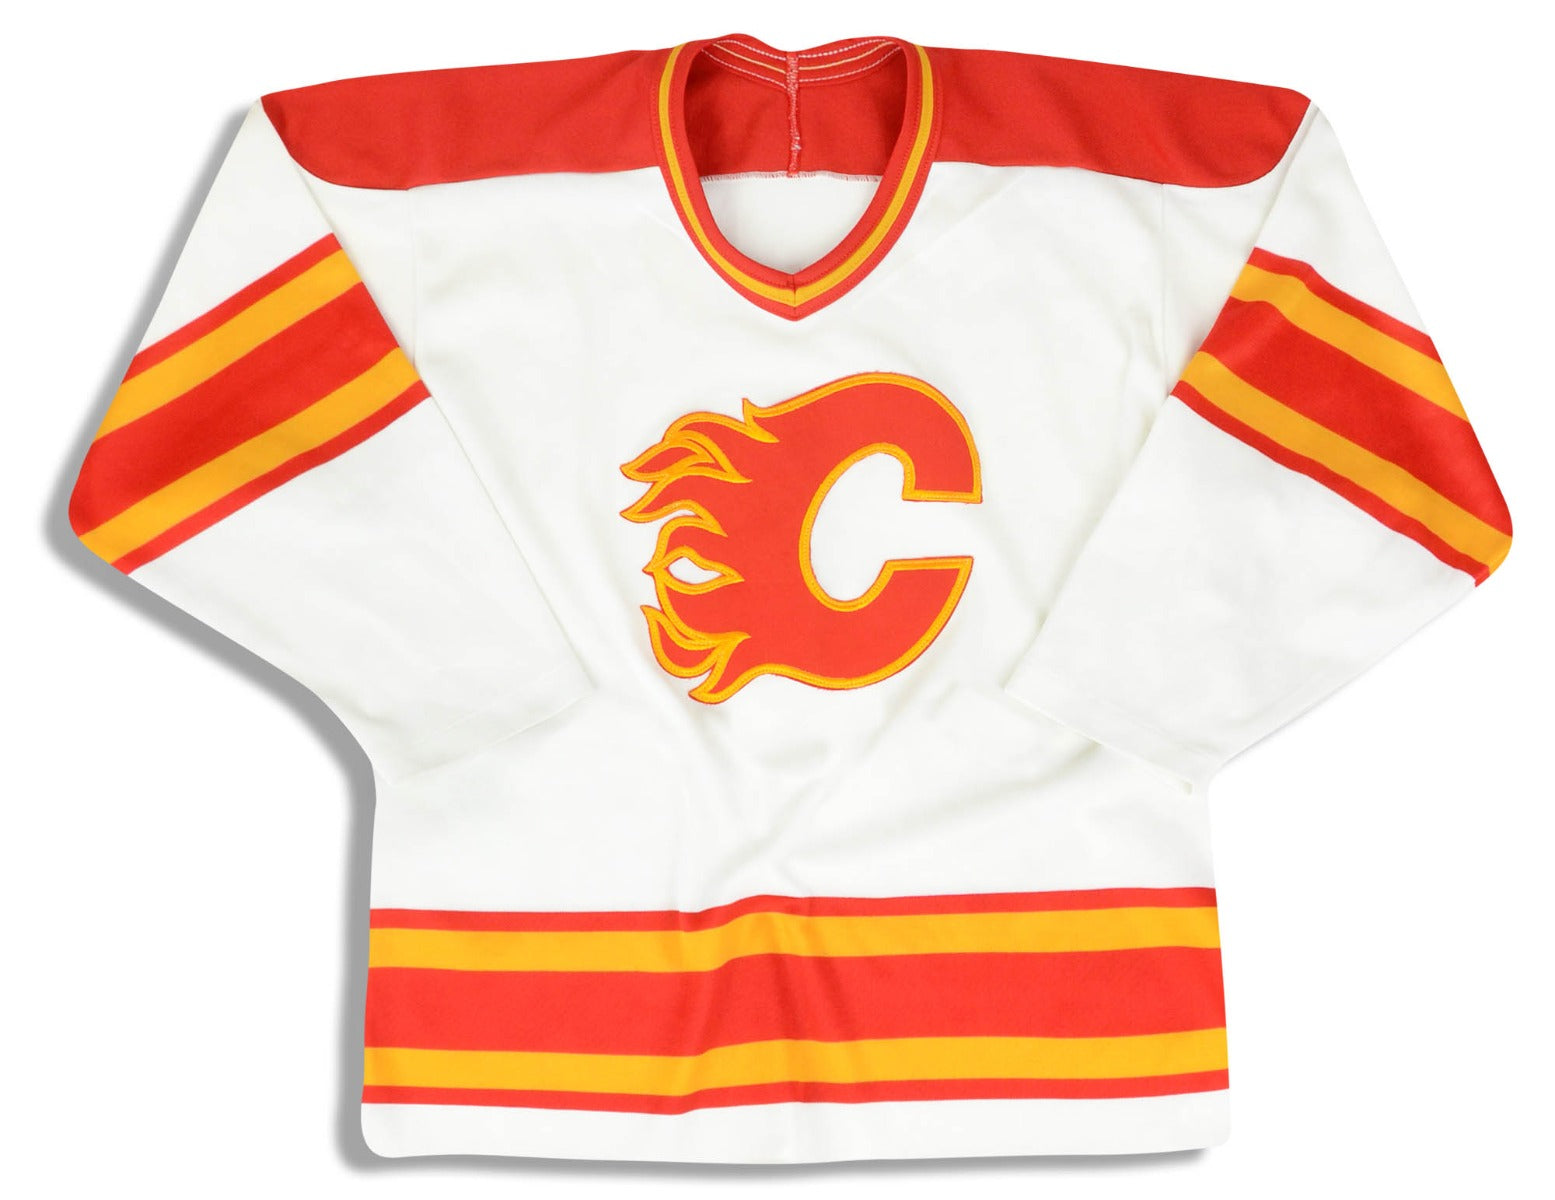 Calgary Flames CCM Hockey Jersey - 5 Star Vintage